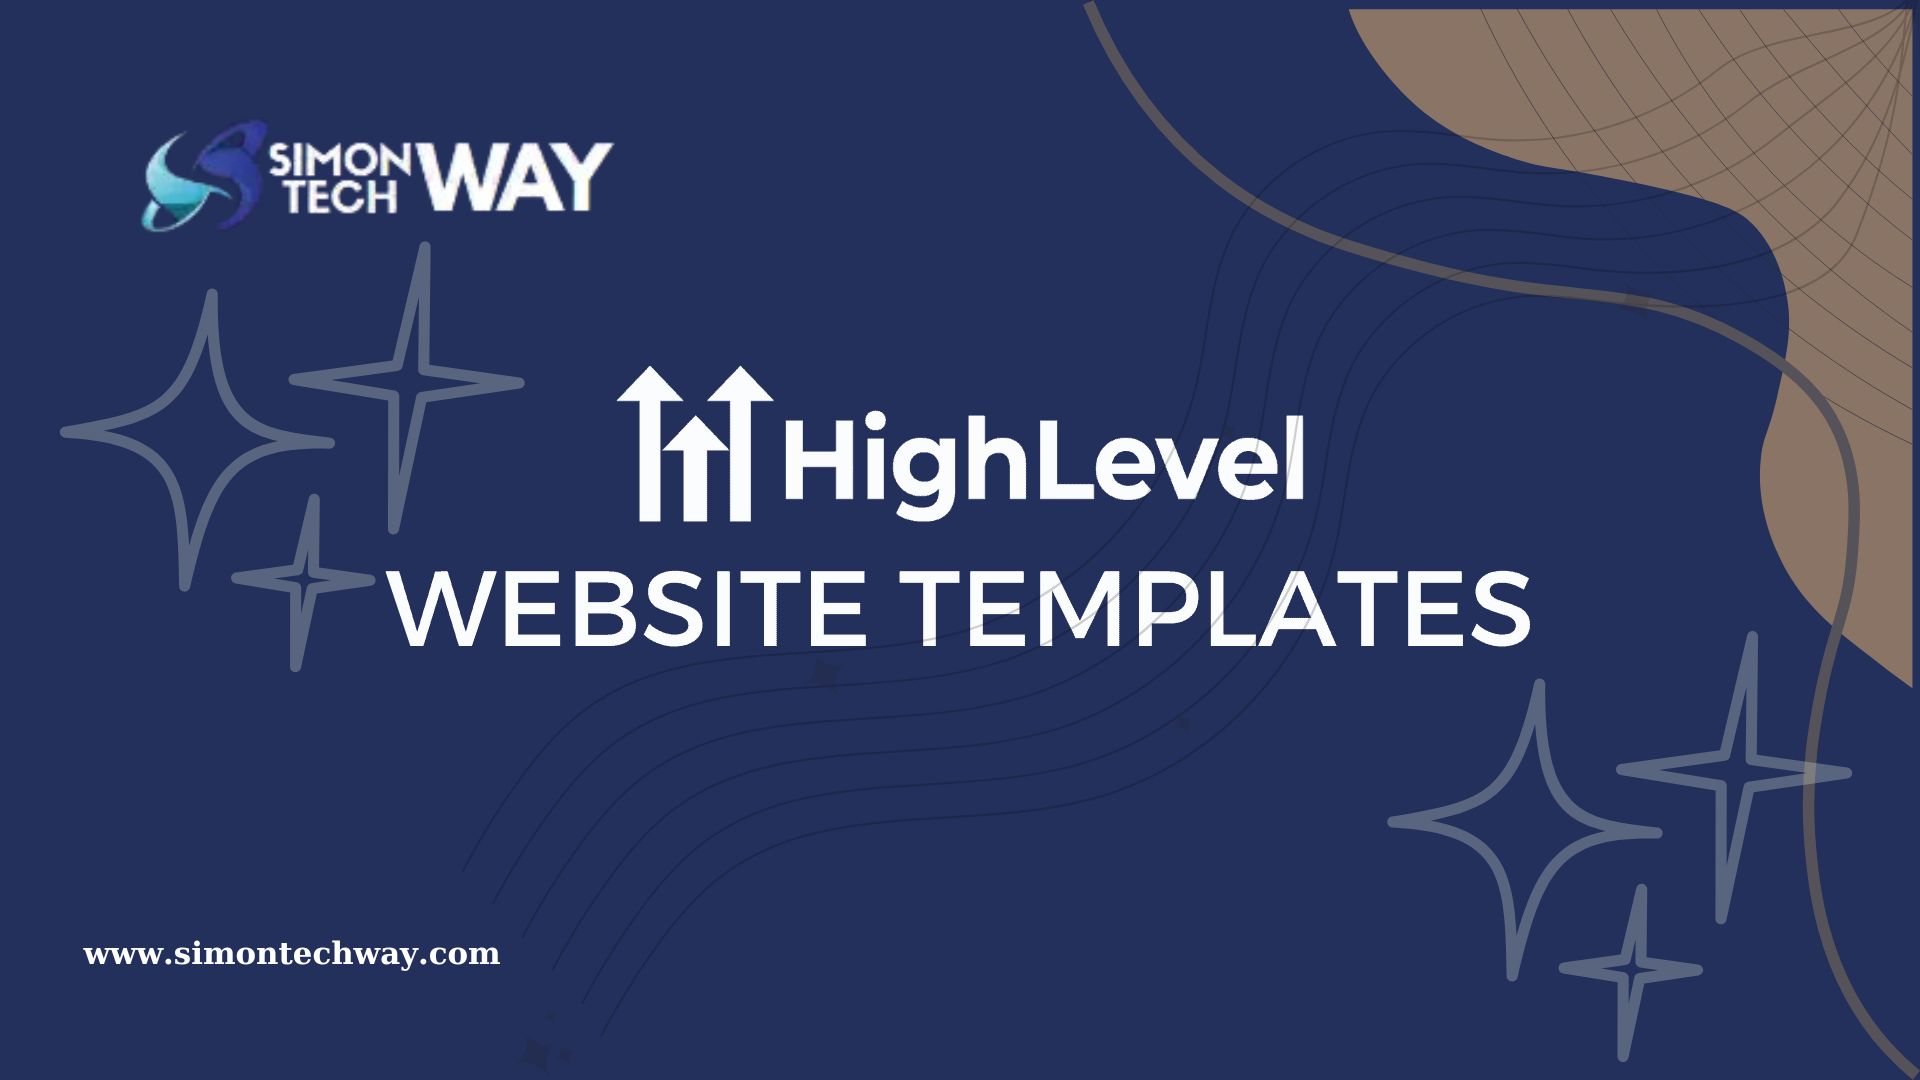 go high level website templates
